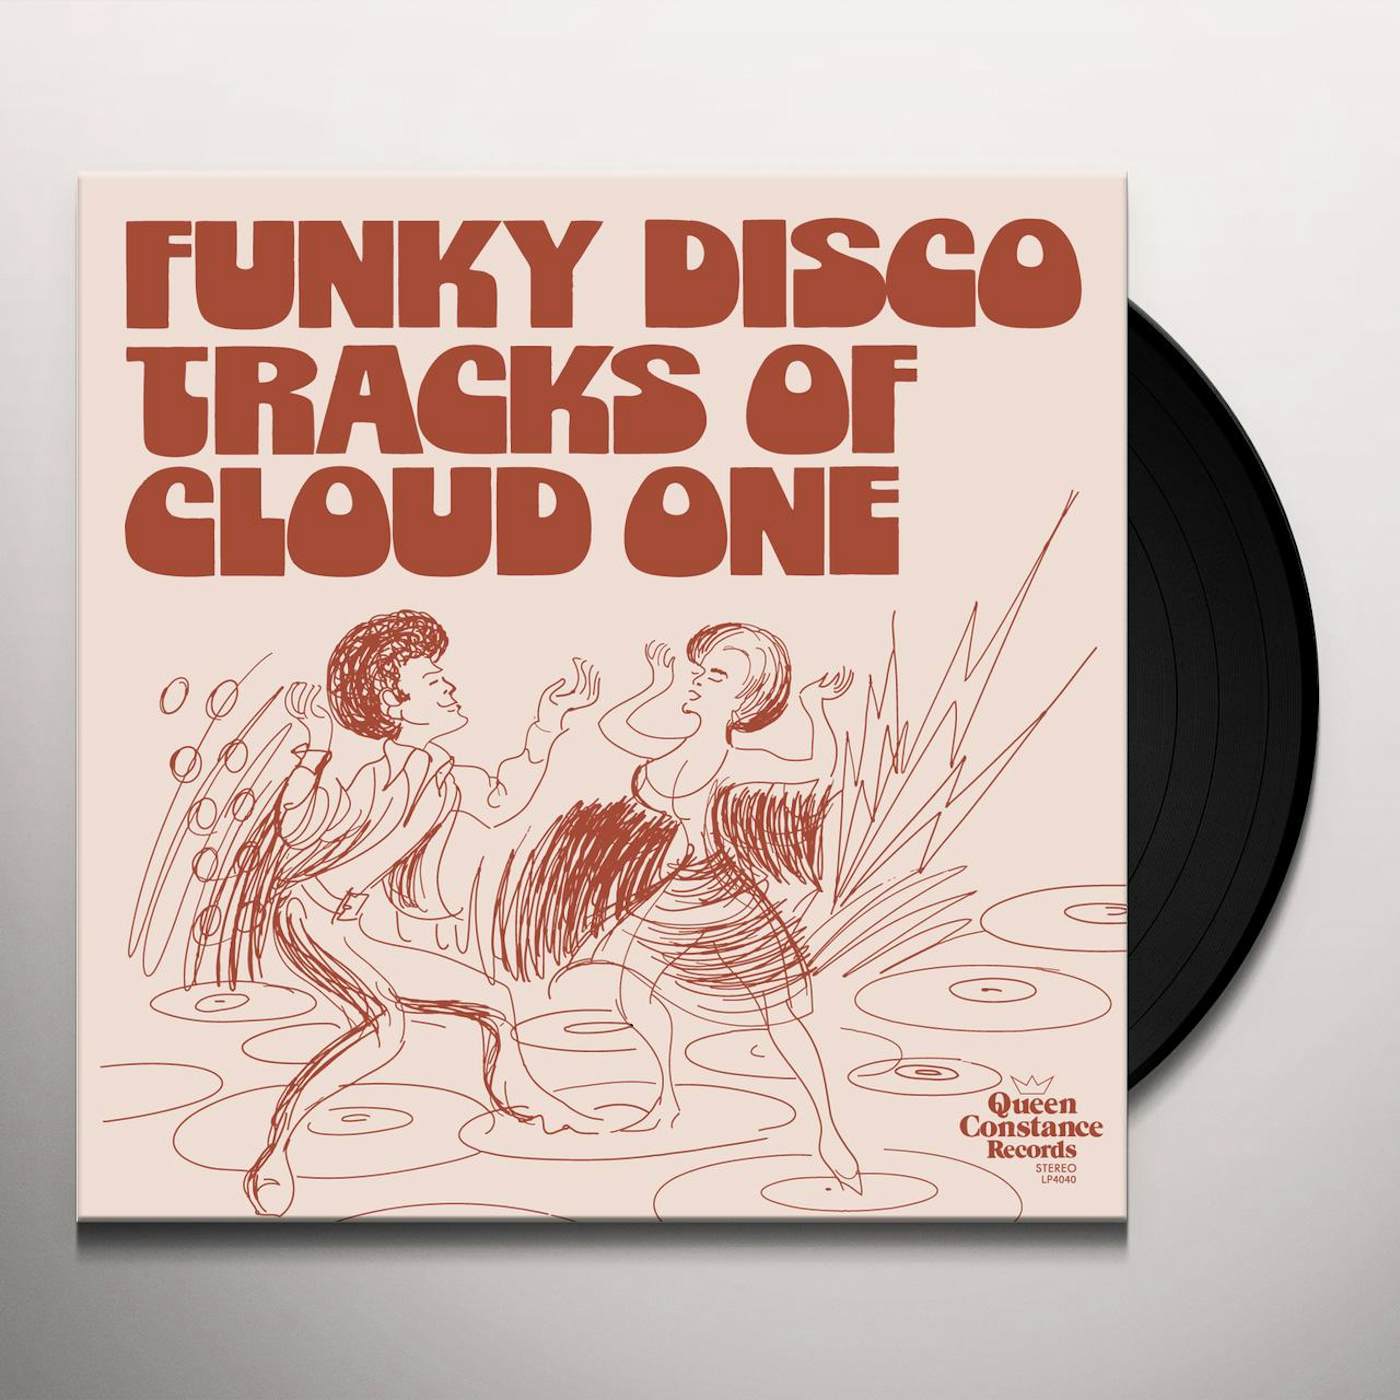 Funky Disco Tracks of Cloud One Vinyl Record